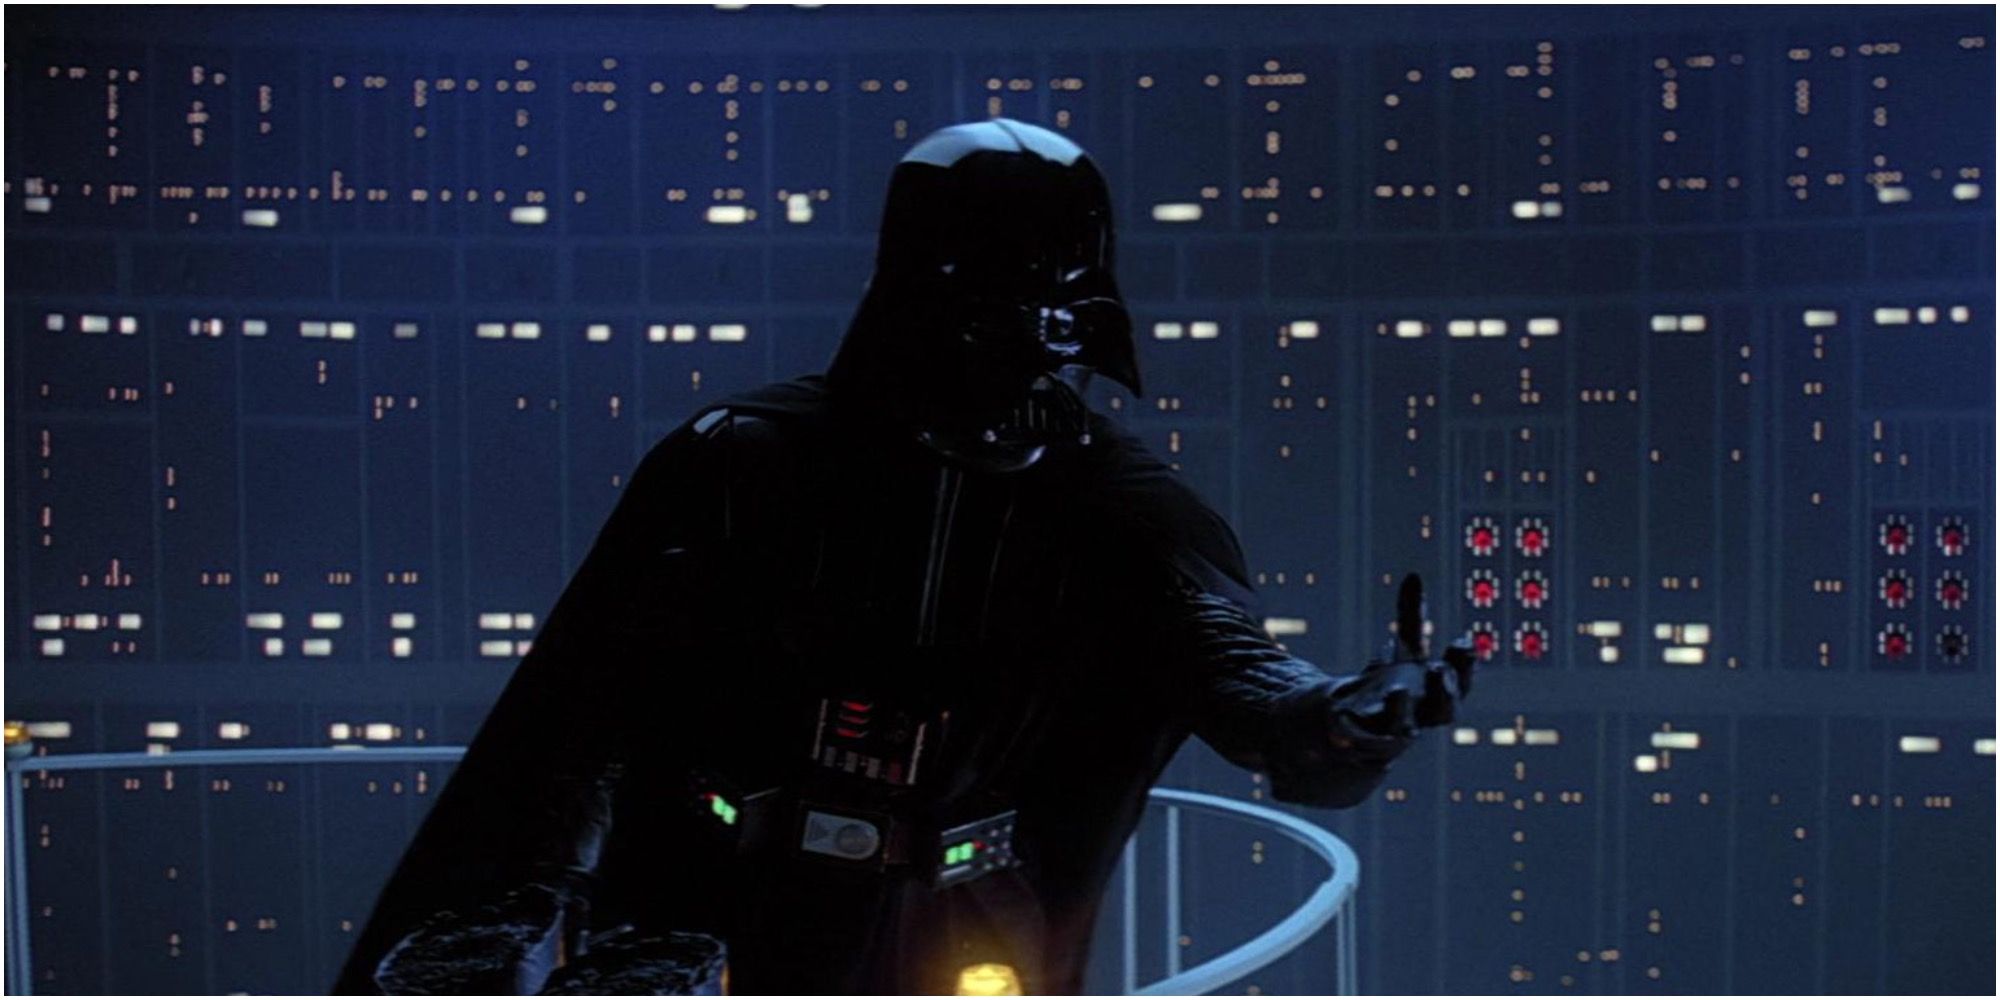 Darth Vader reveals himself to his son, Luke Skywalker